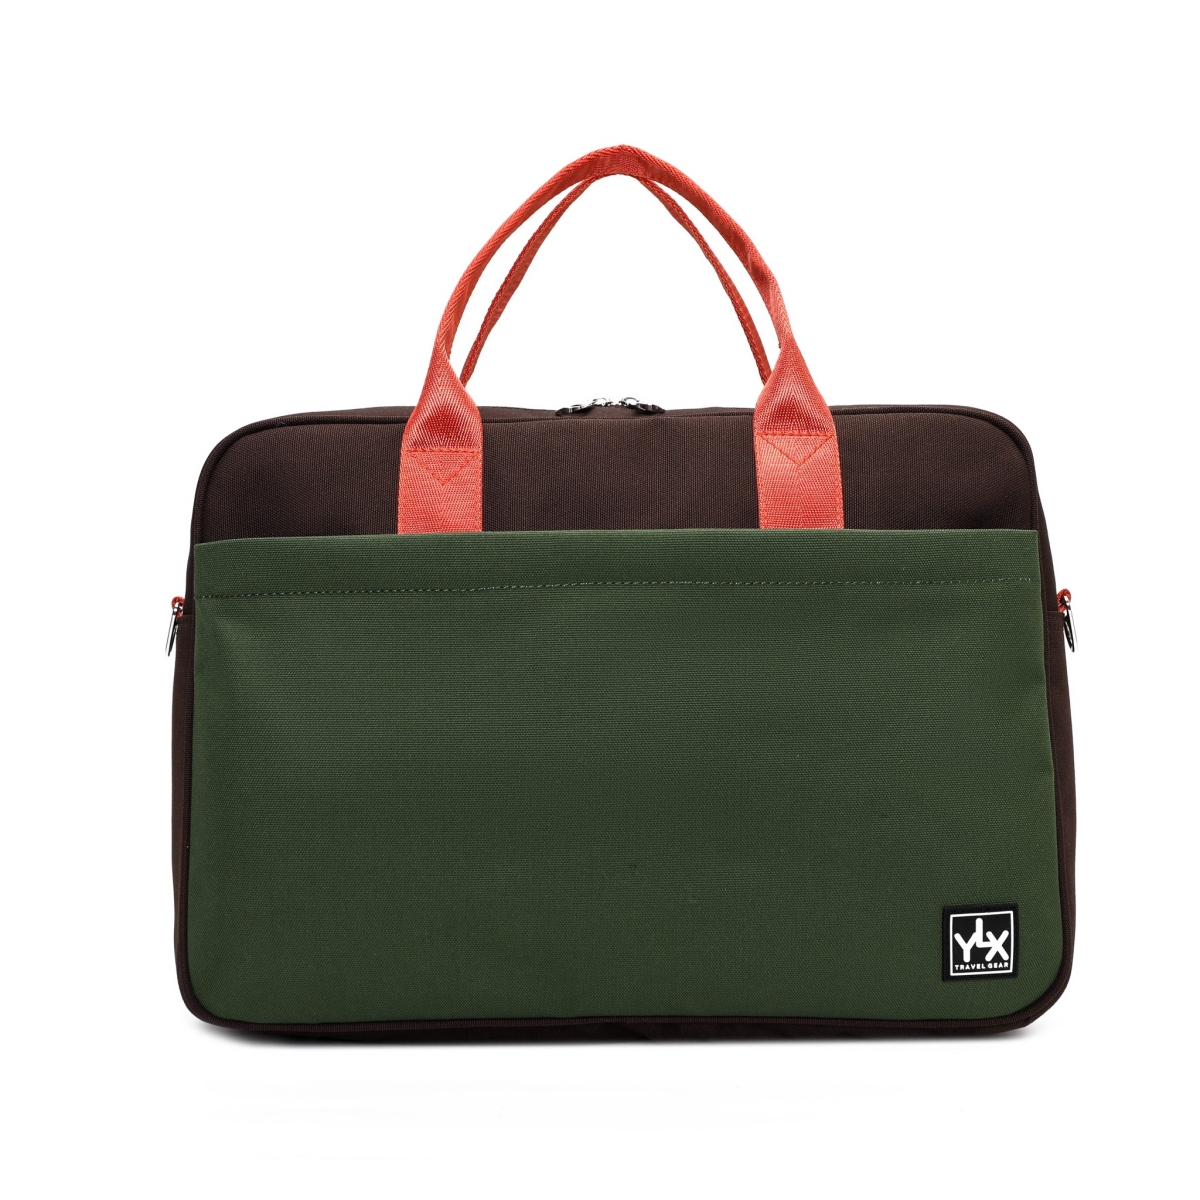 YLX Original Laptop Bag | Army Green & Dark Brown